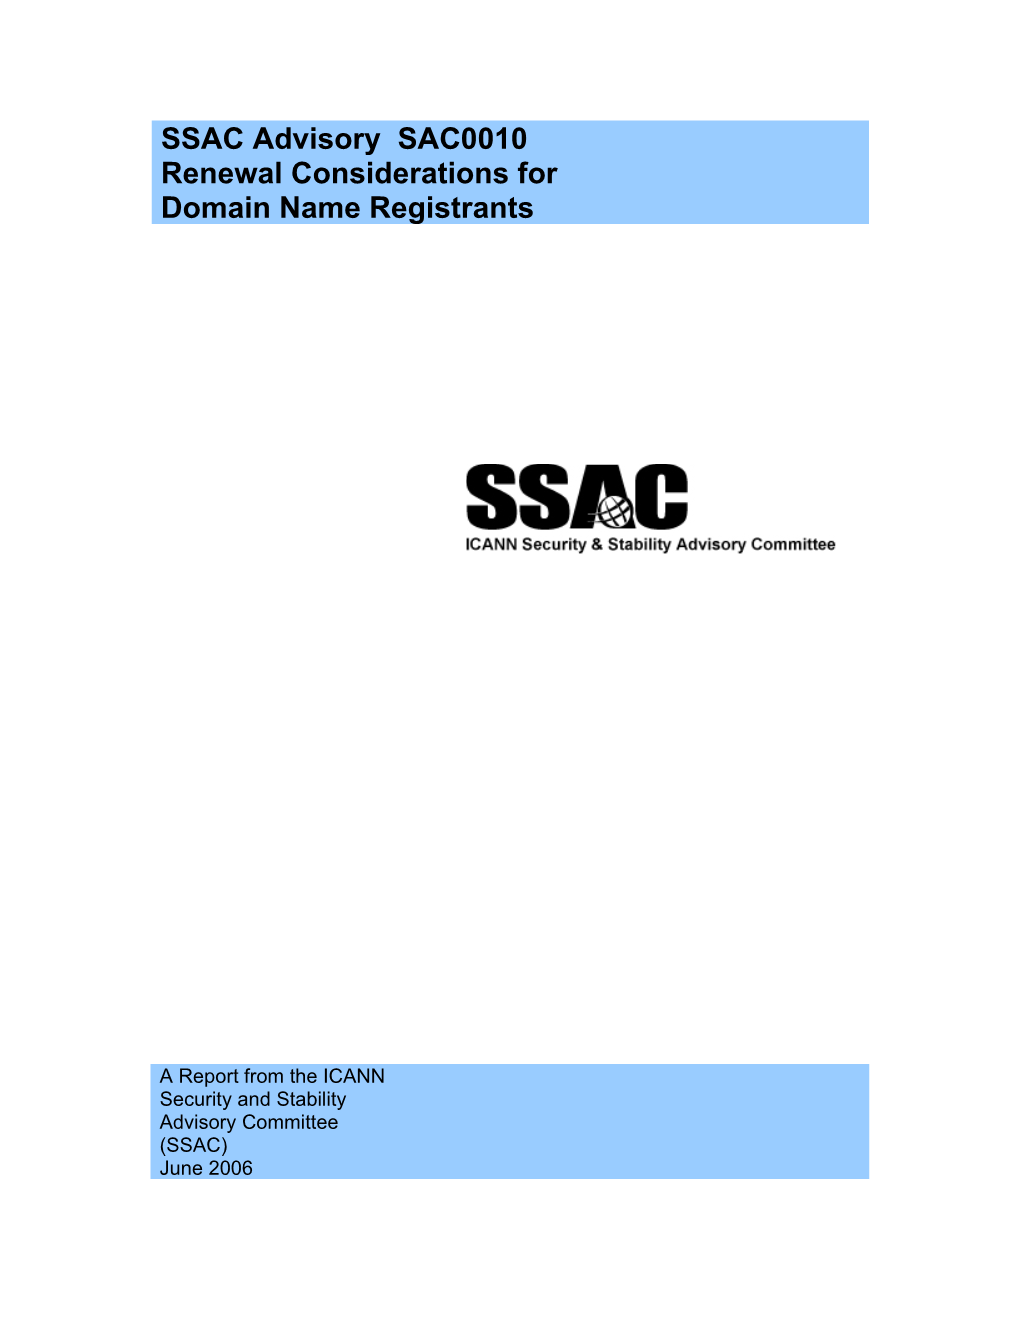 SSAC Advisory SAC0010 Renewal Considerations for Domain Name Registrants